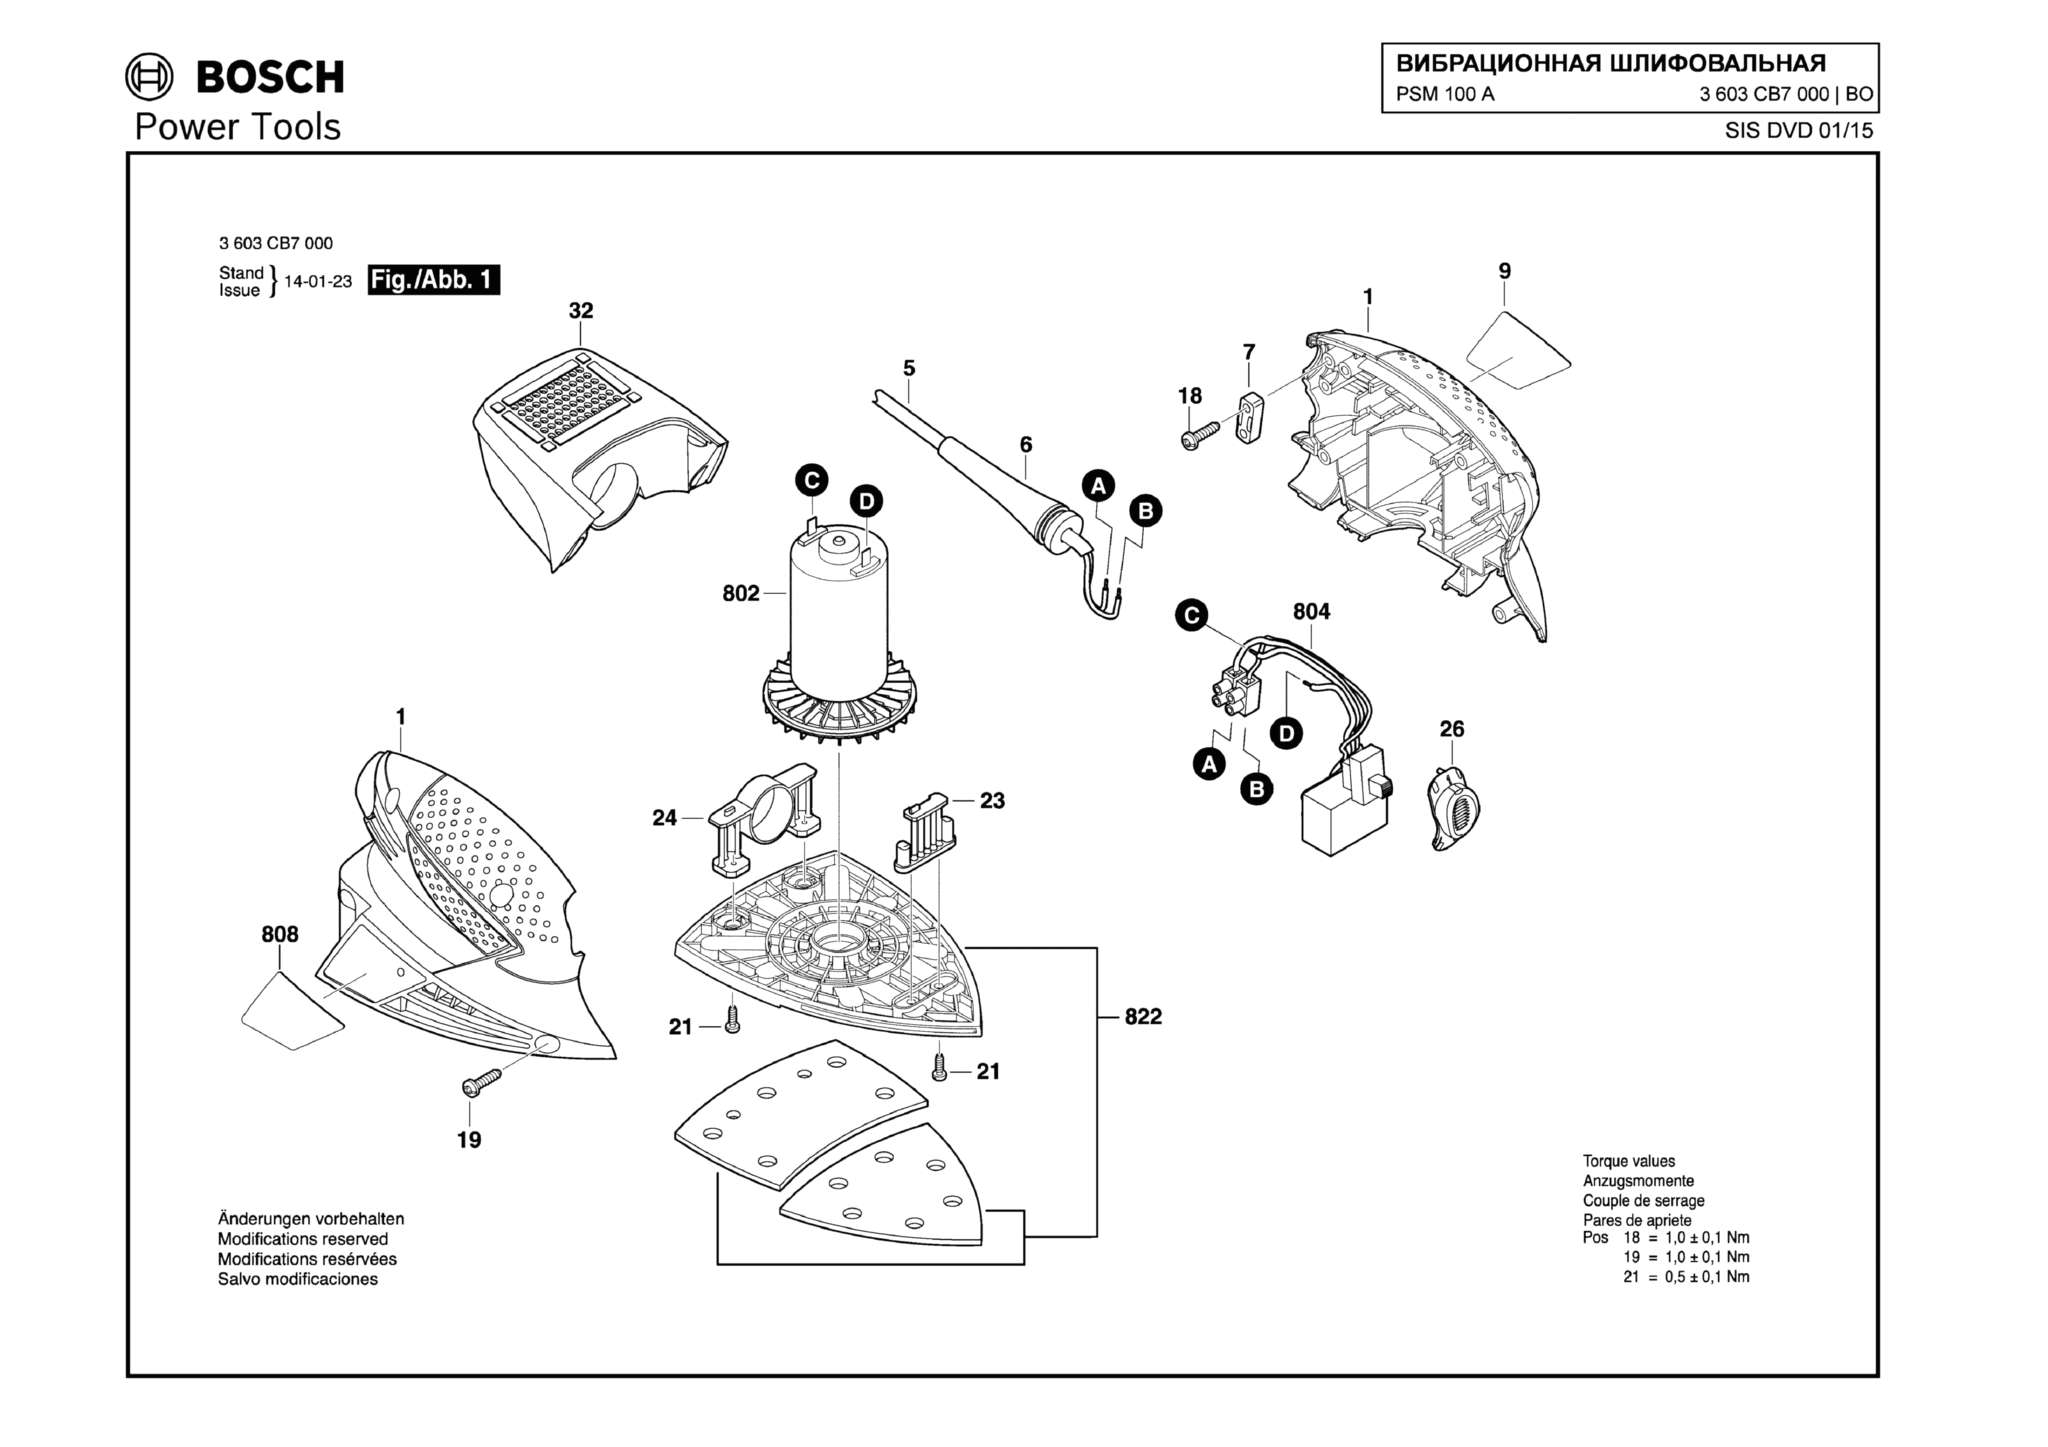 Запчасти, схема и деталировка Bosch PSM 100 A (ТИП 3603CB7000)